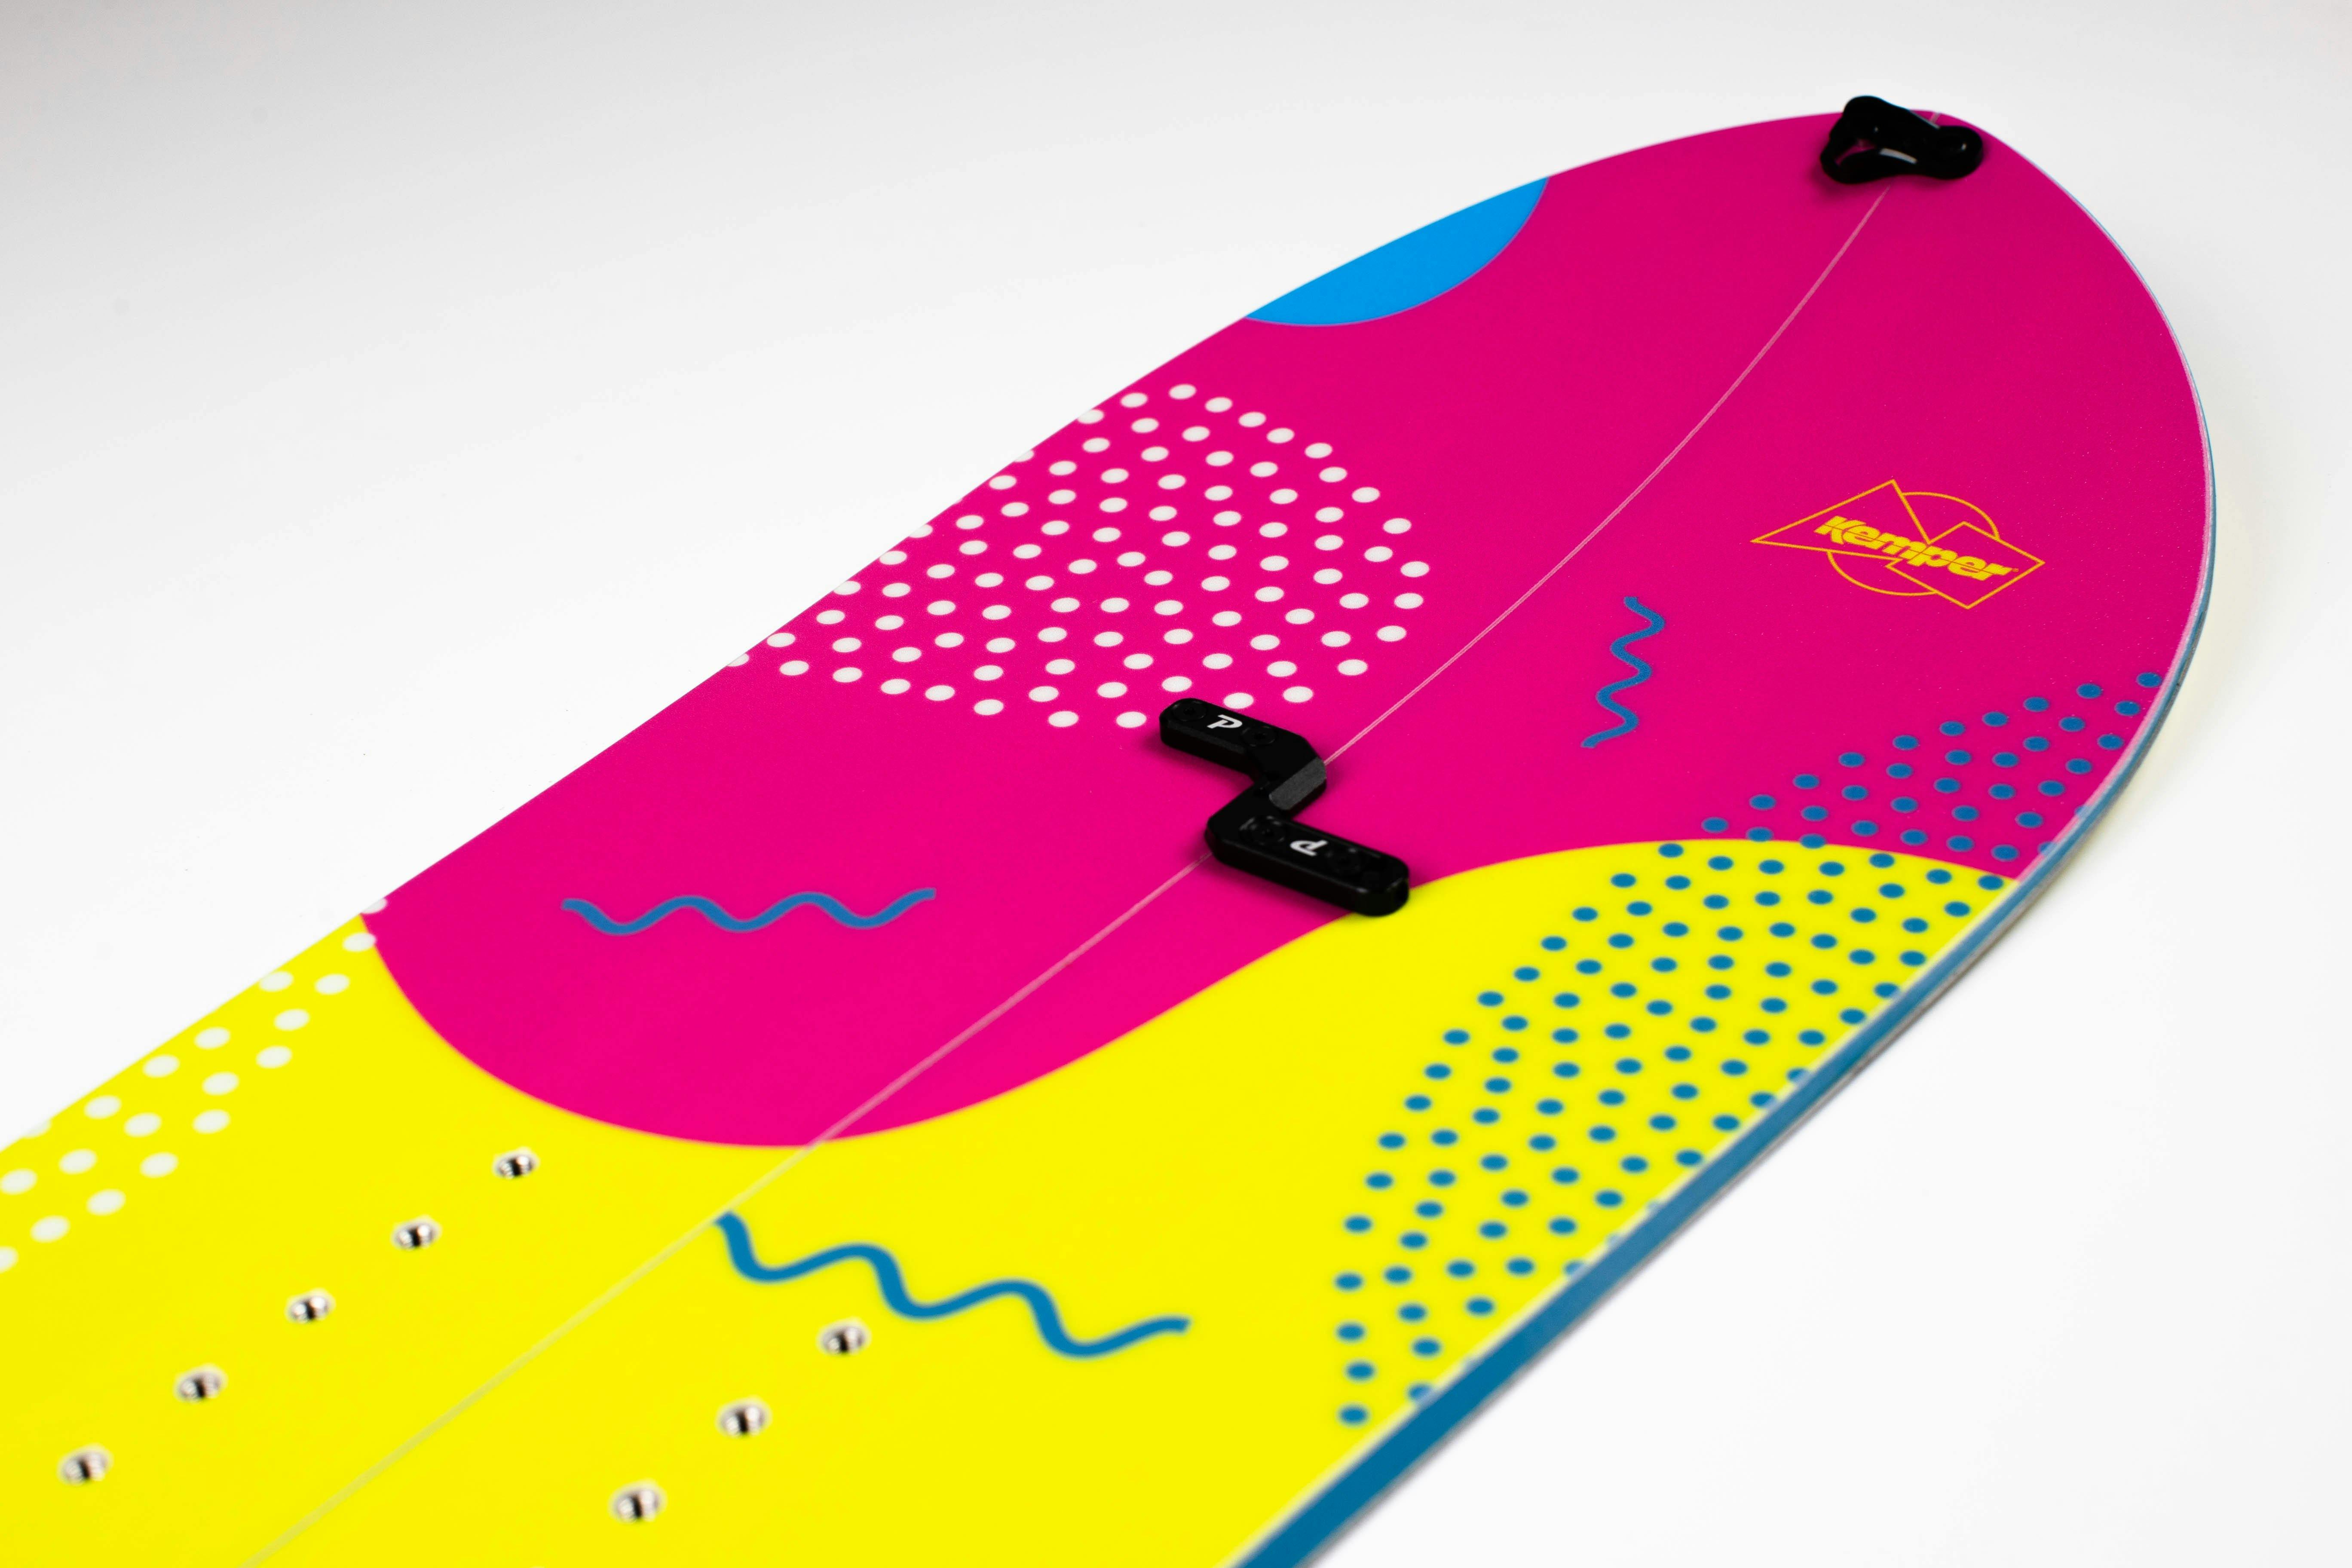 Kemper SR "Surf Rider" Splitboard · 2021 · 155 cm